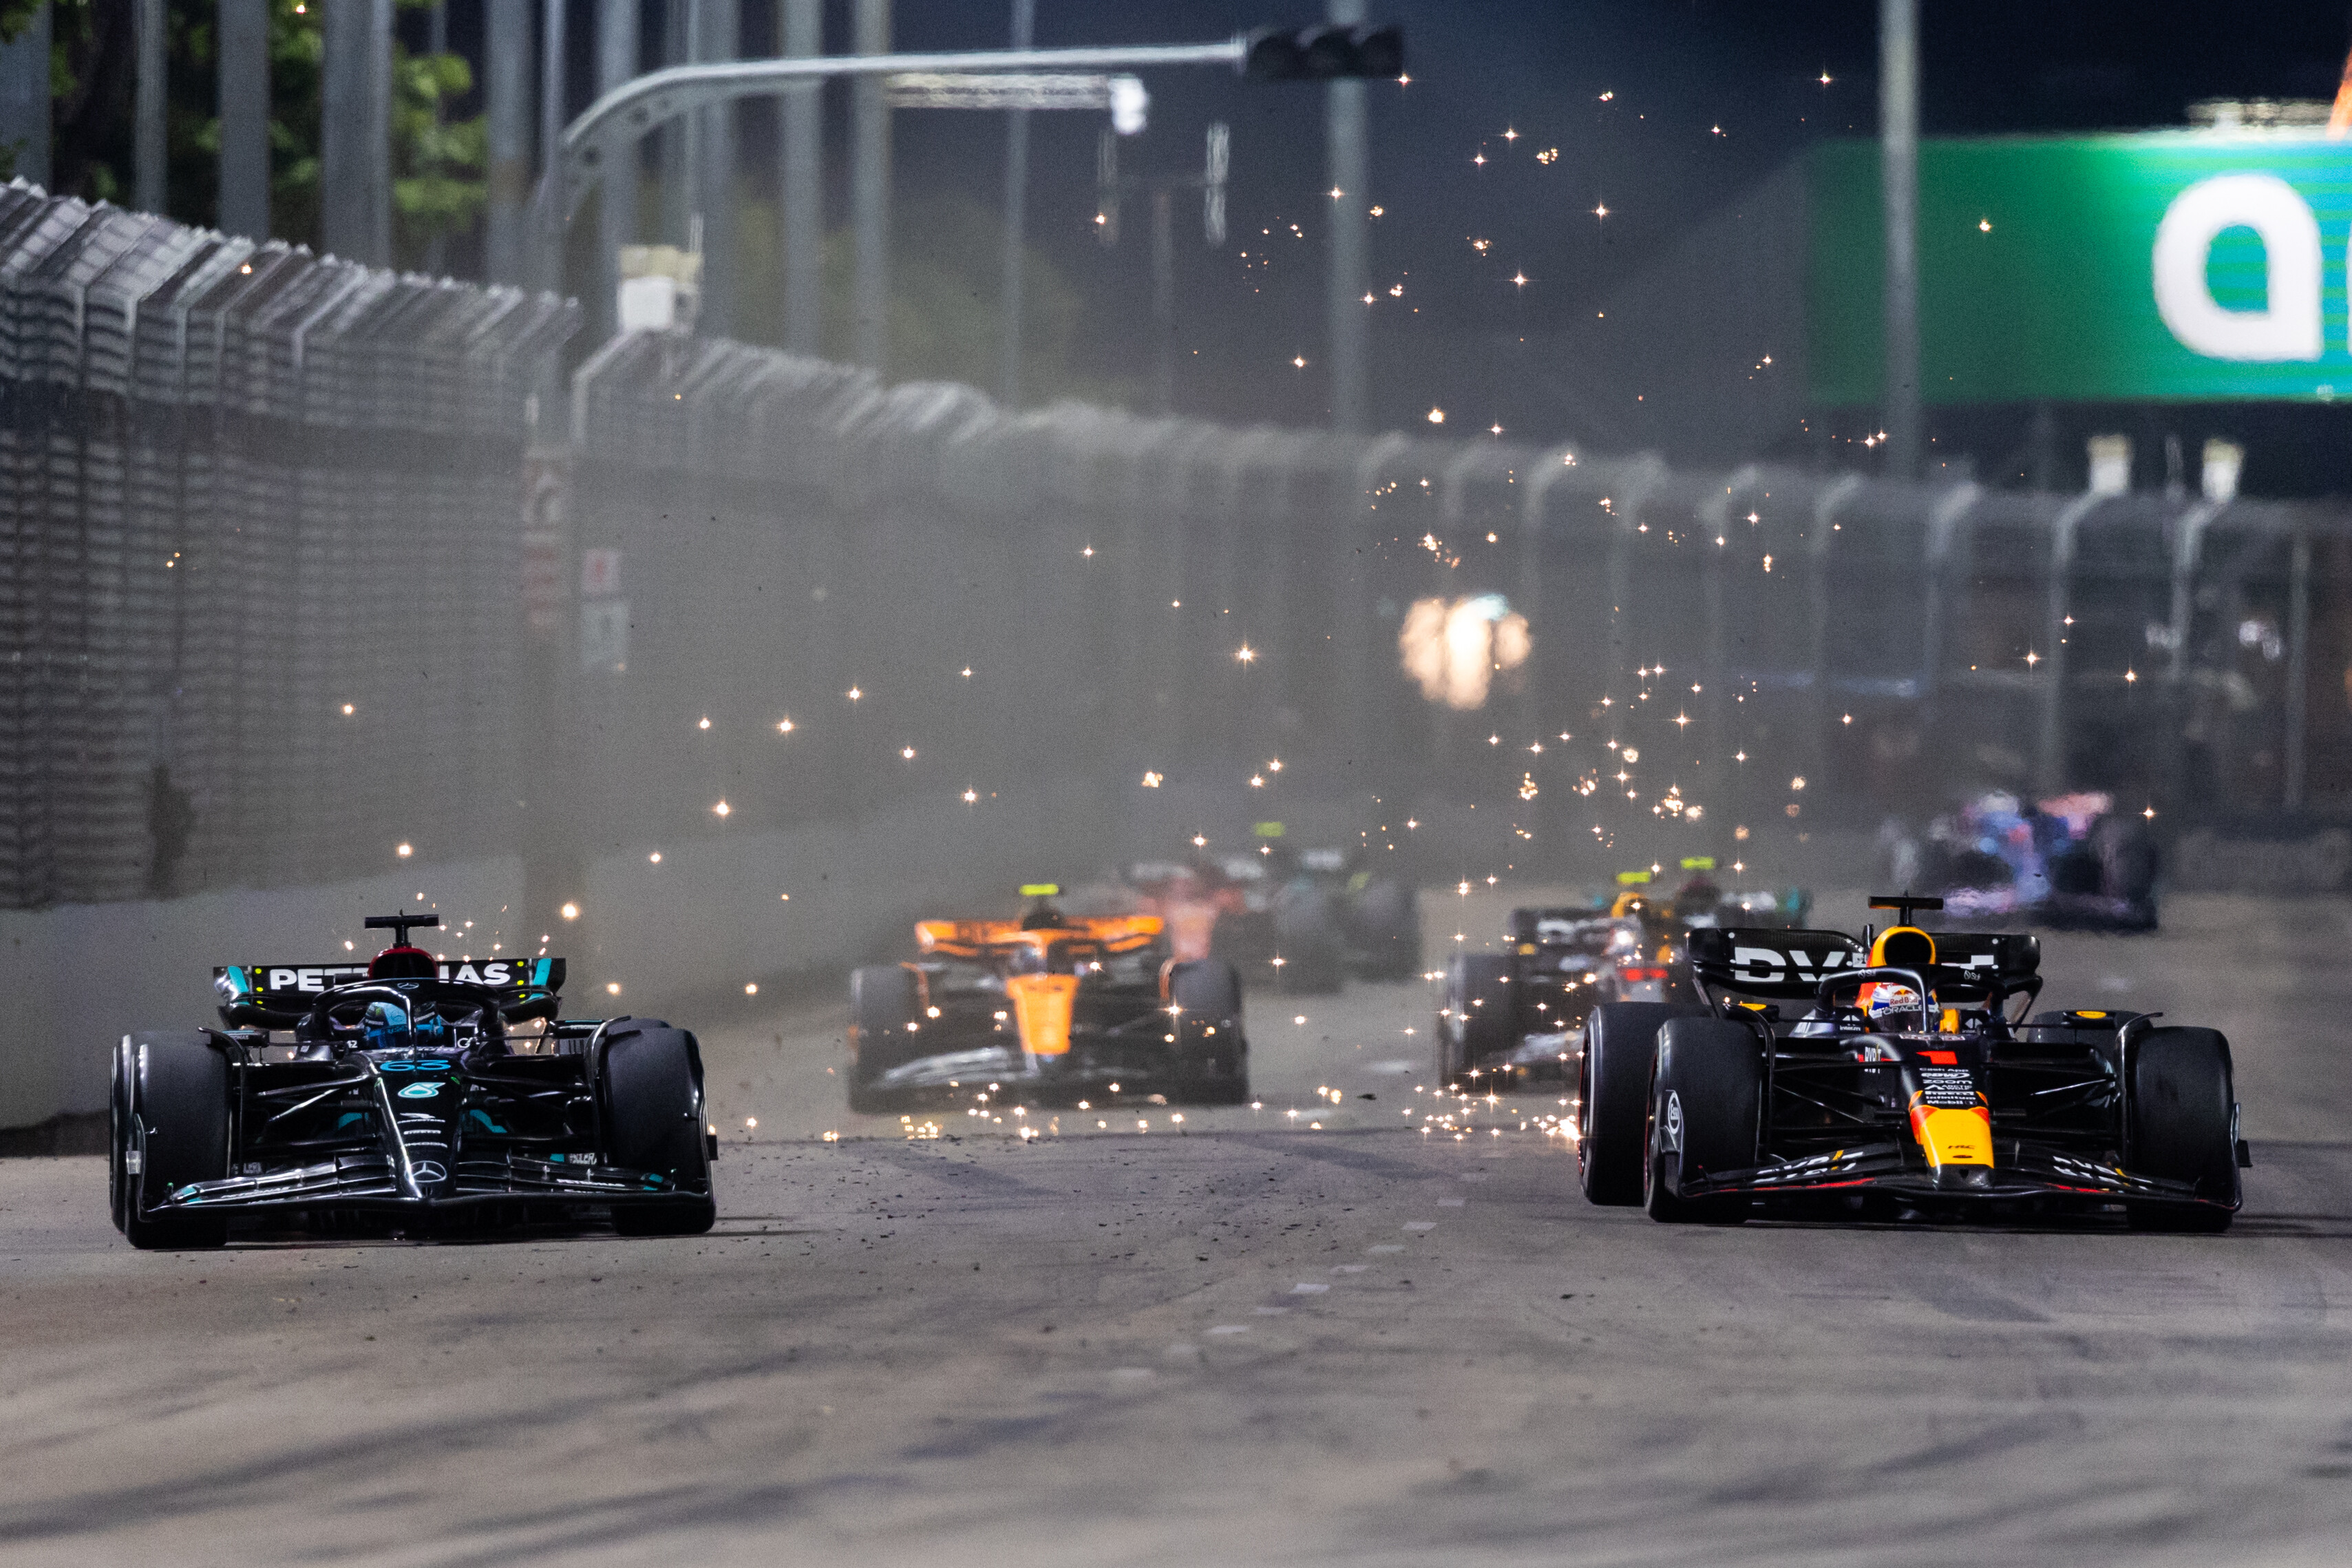 F1 Grand Prix Of Singapore